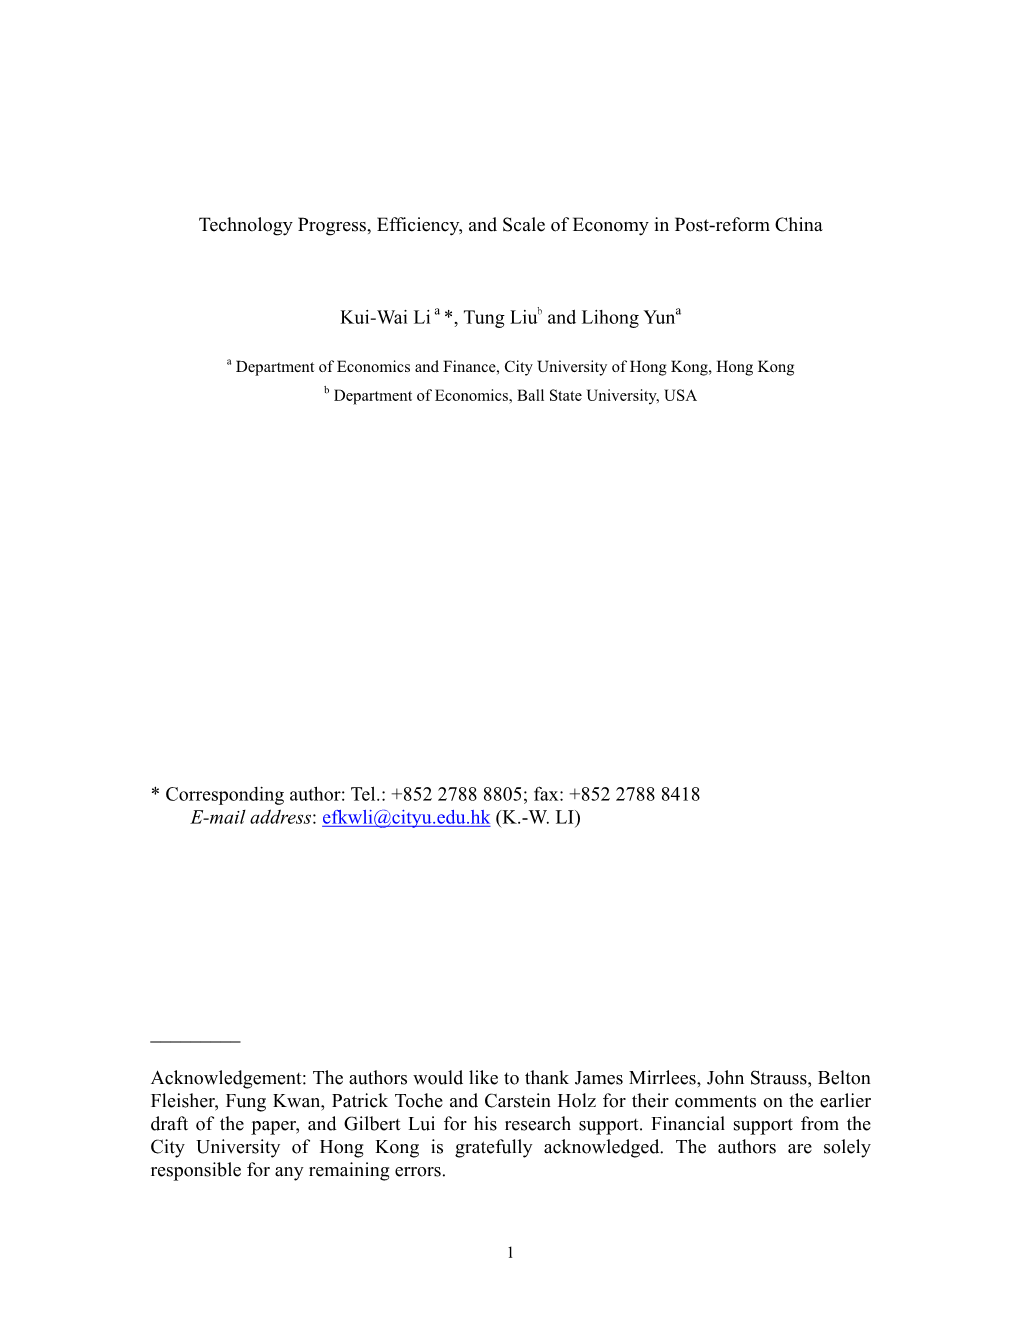 Technology Progress, Efficiency, and Scale of Economy in Post-Reform China Kui-Wai Li *, Tung Liub and Lihong Yun * Correspondin